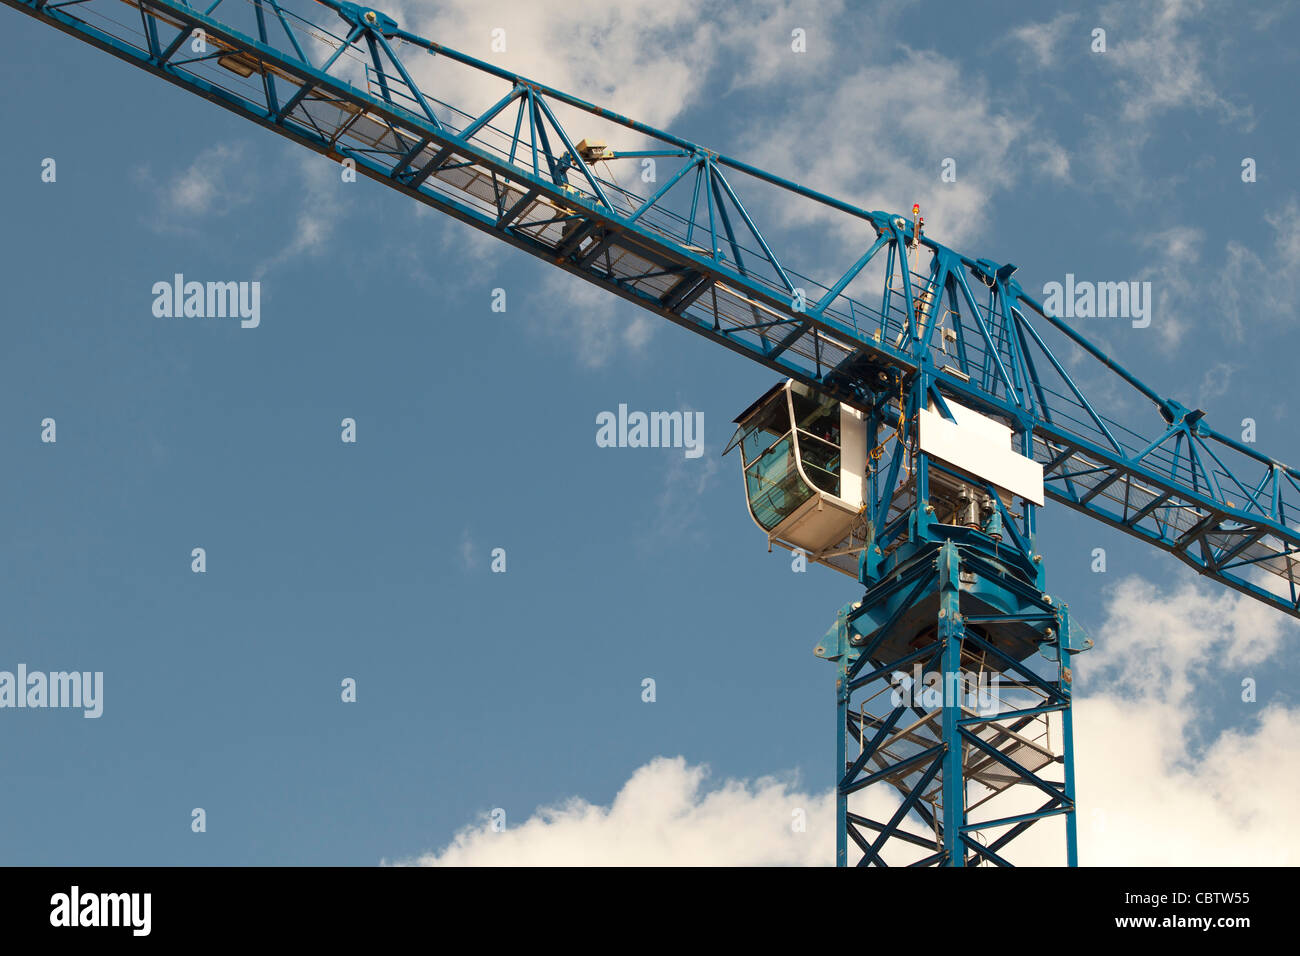 Construction Crane Stock Photo